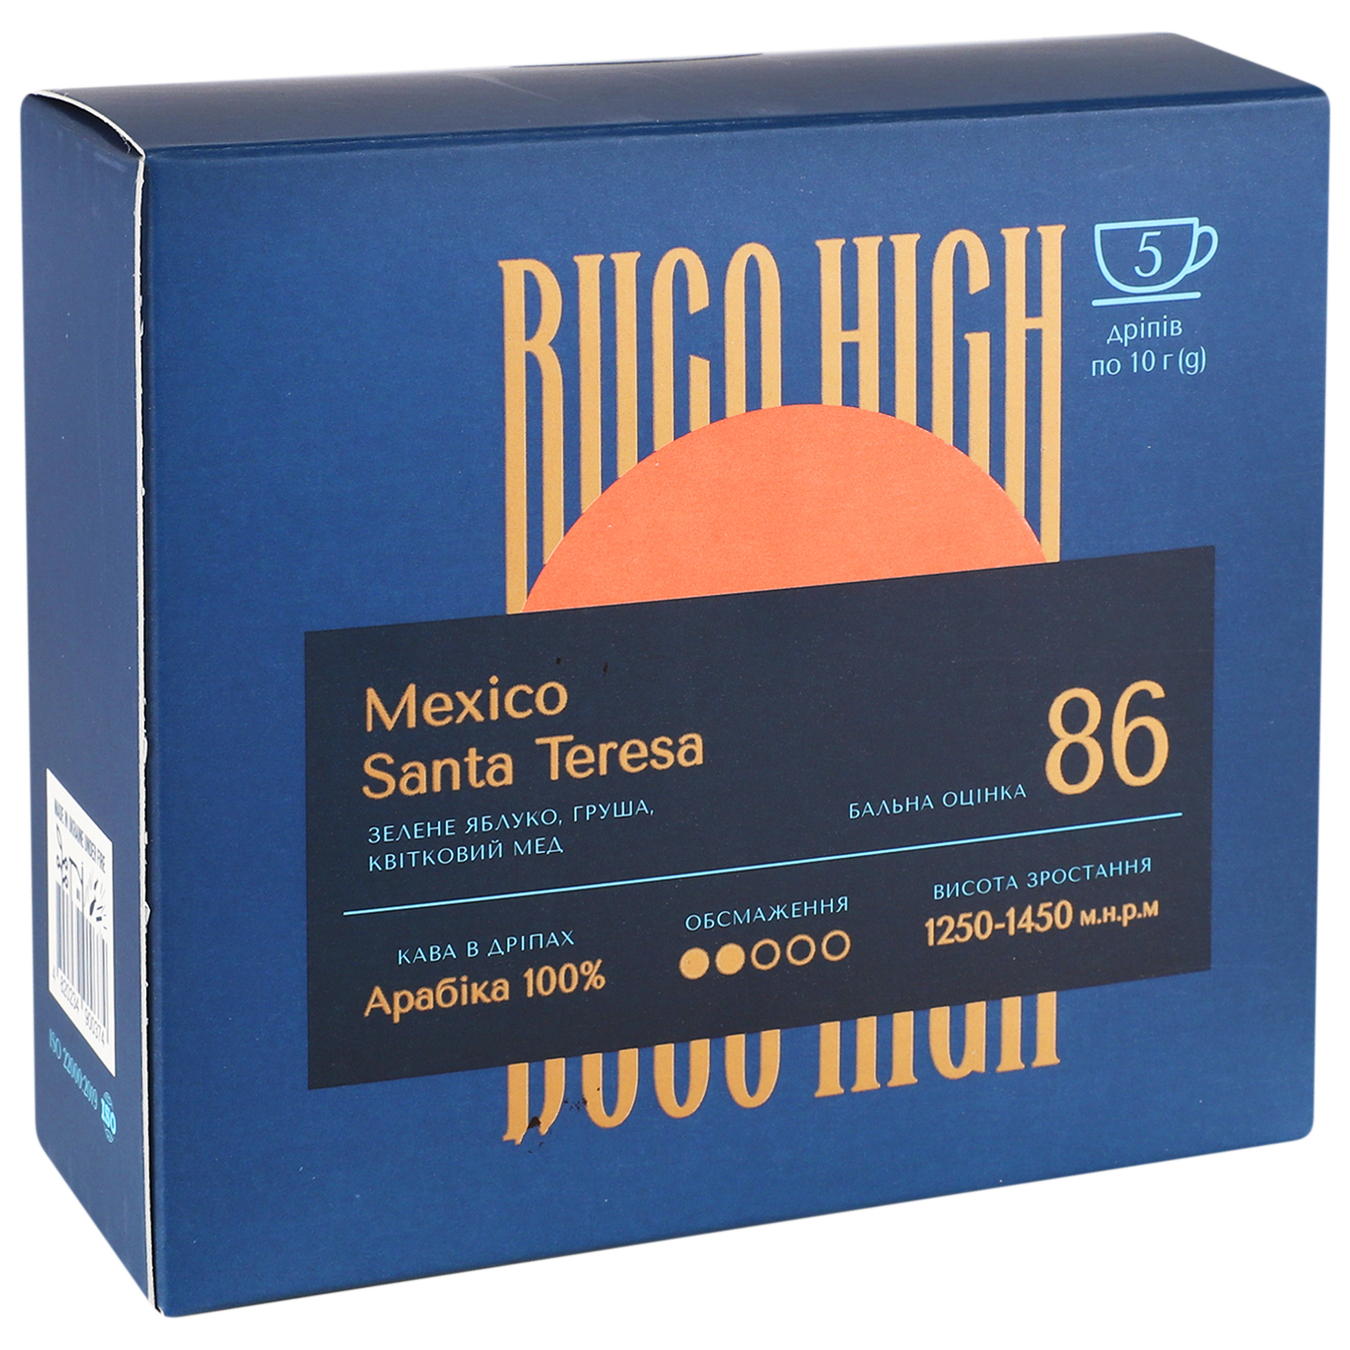 Кава в дріпах Buco High Mexico 5*10г 2